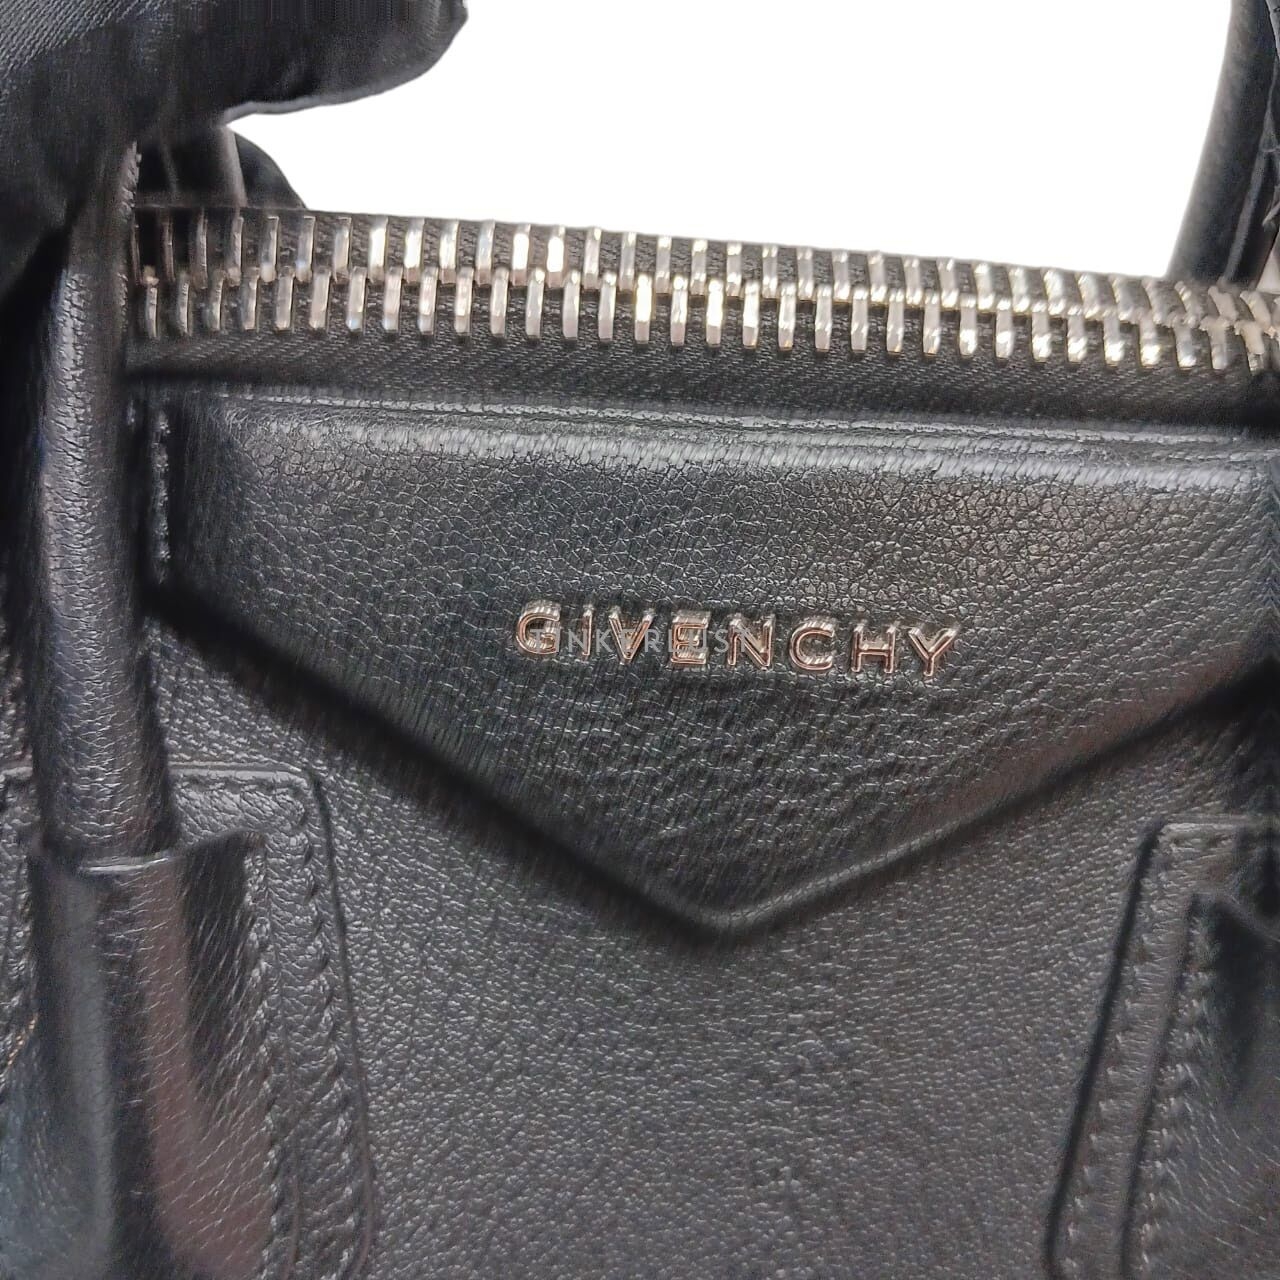 Givenchy Antigona Small Black SHW 2017 Satchel